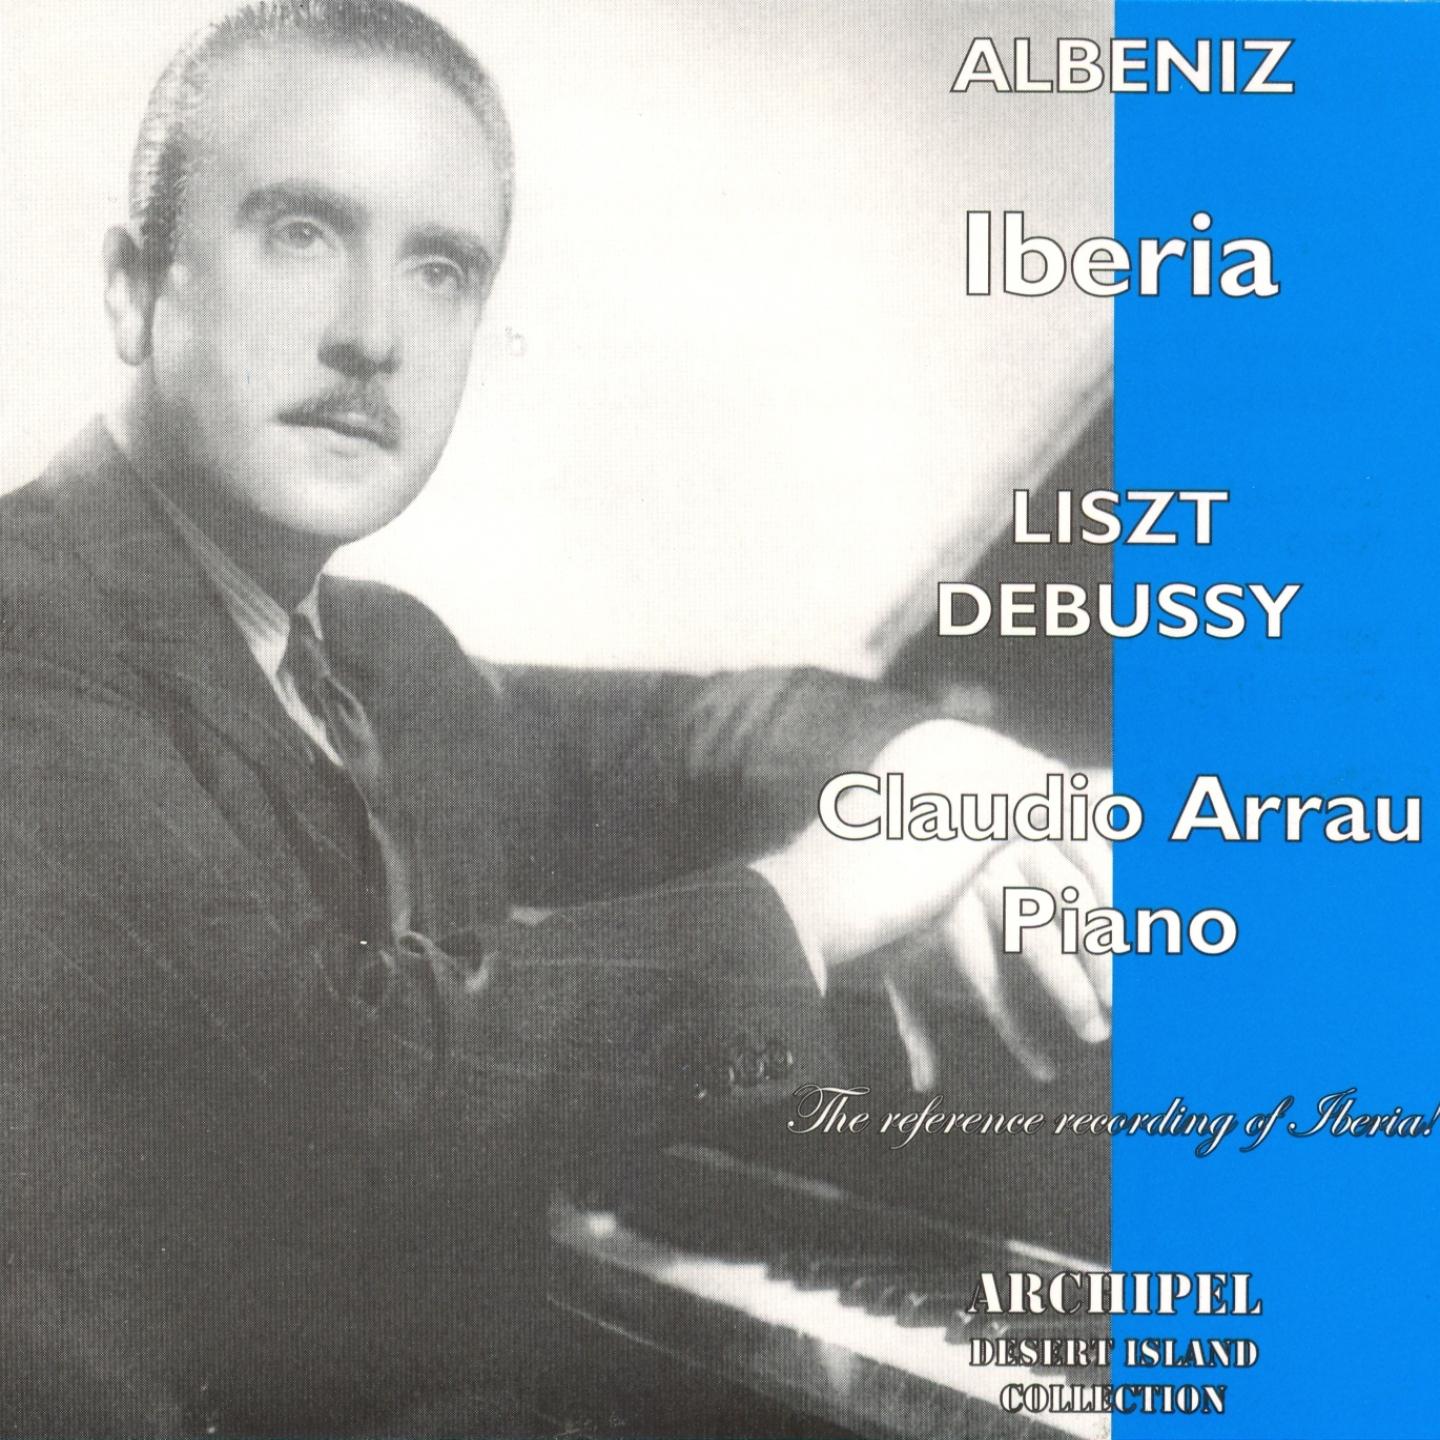 Liszt - Albeniz - Debussy专辑